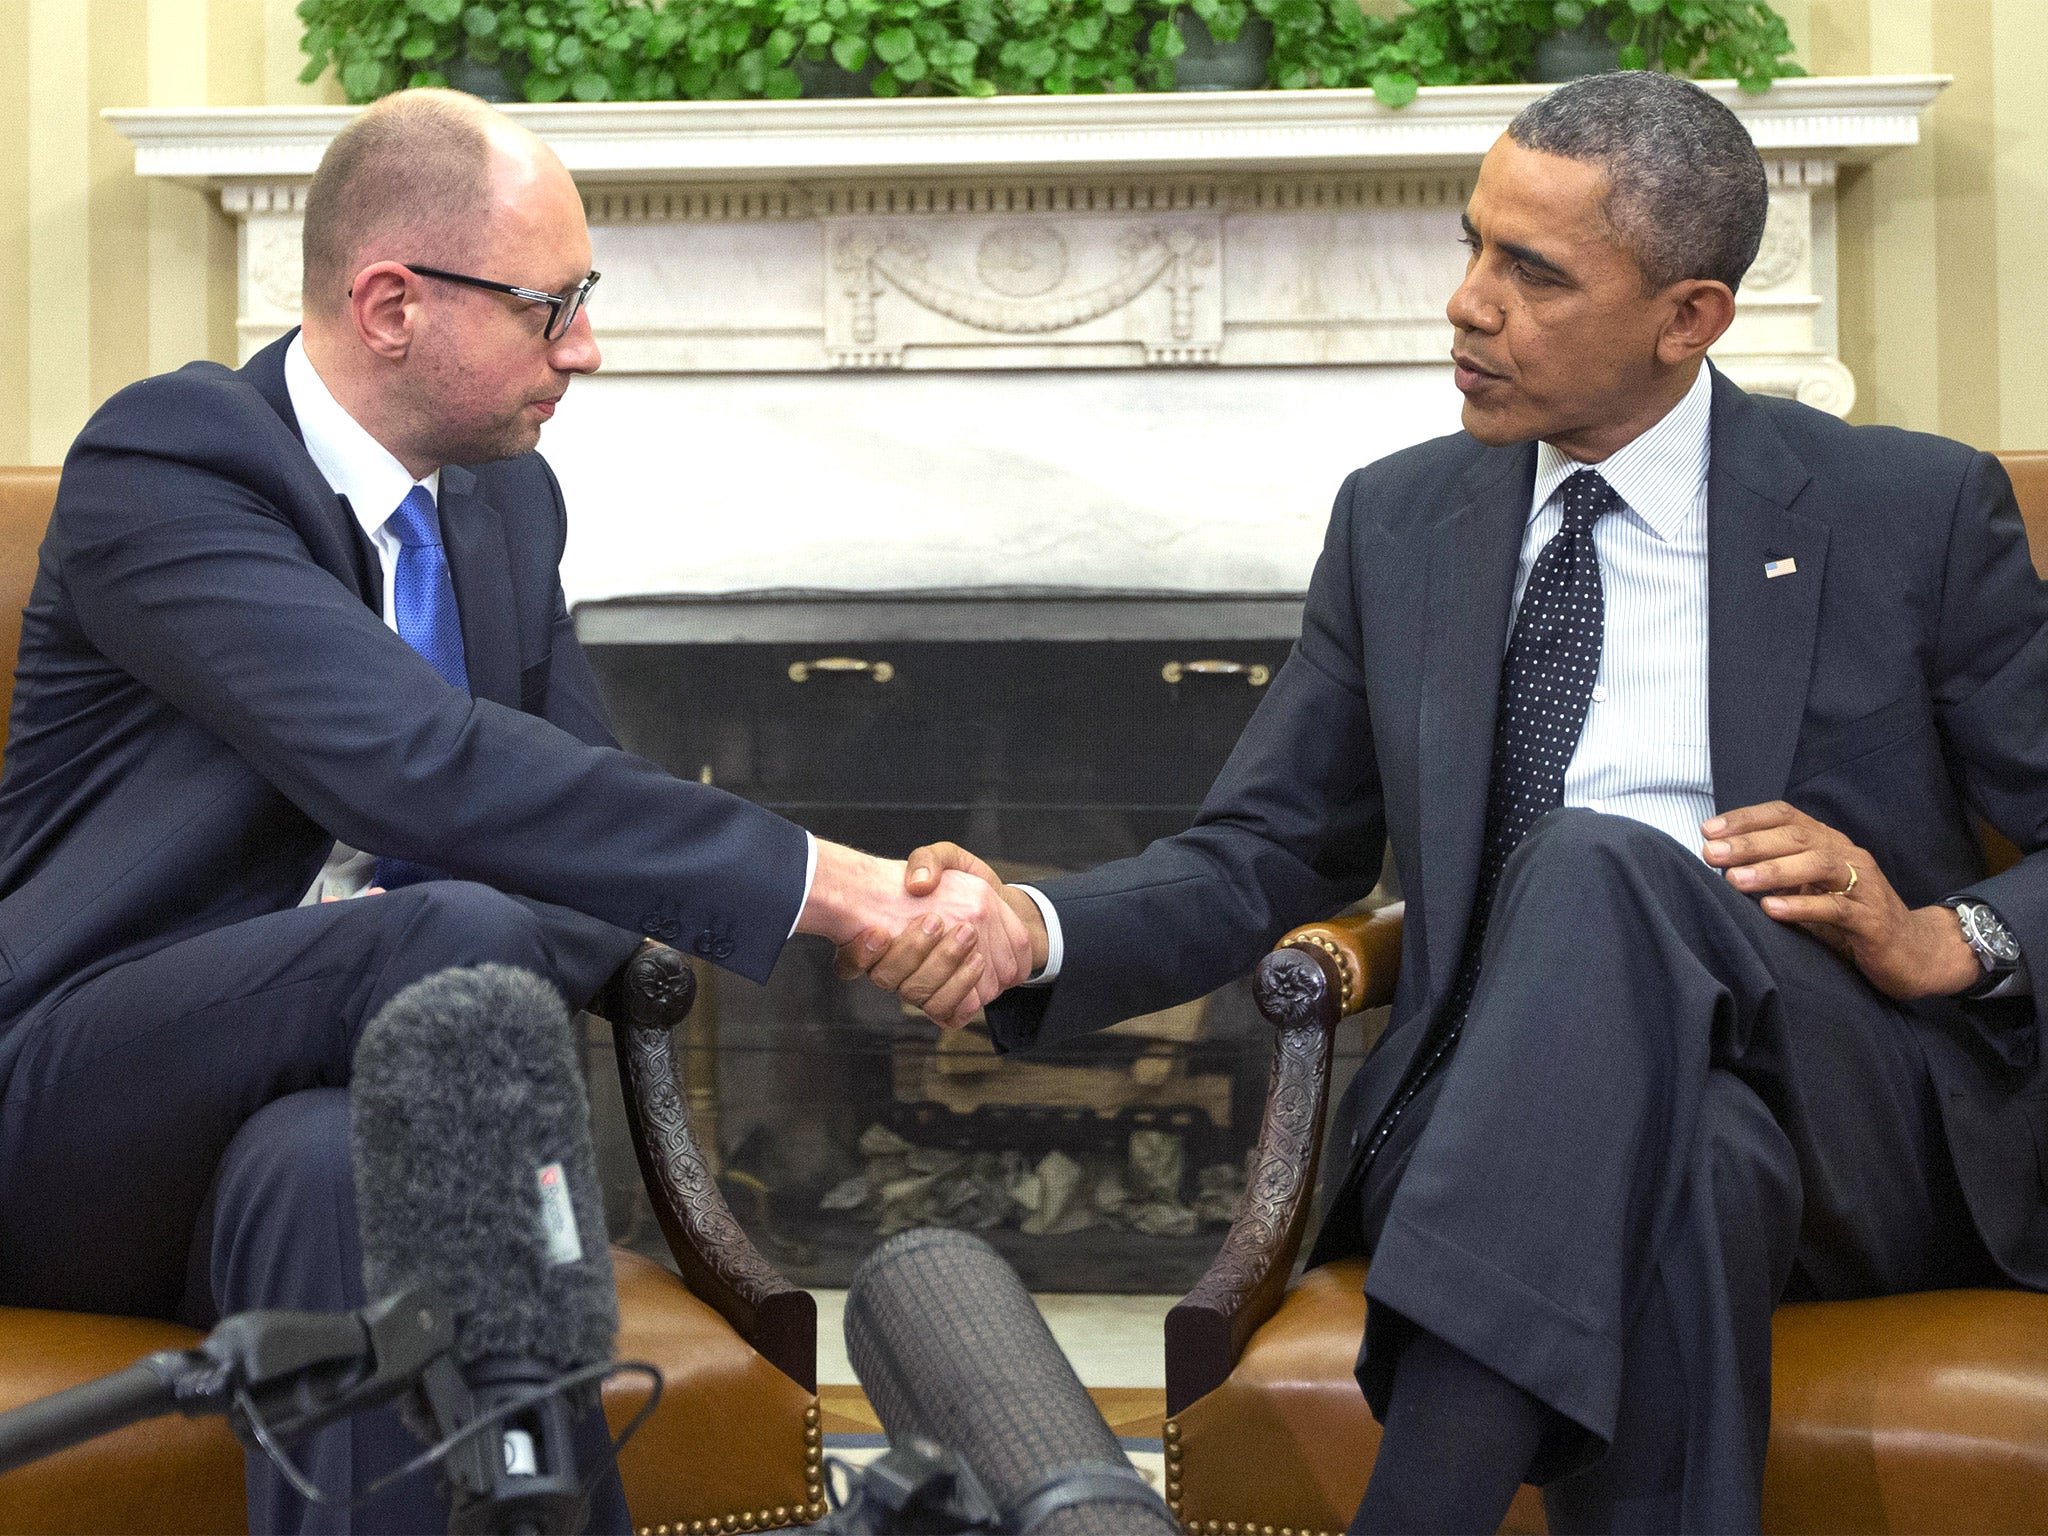 Barack Obama offered his backing to Ukraine’s Prime Minister, Arseniy Yatsenyuk, during a meeting at the White House 